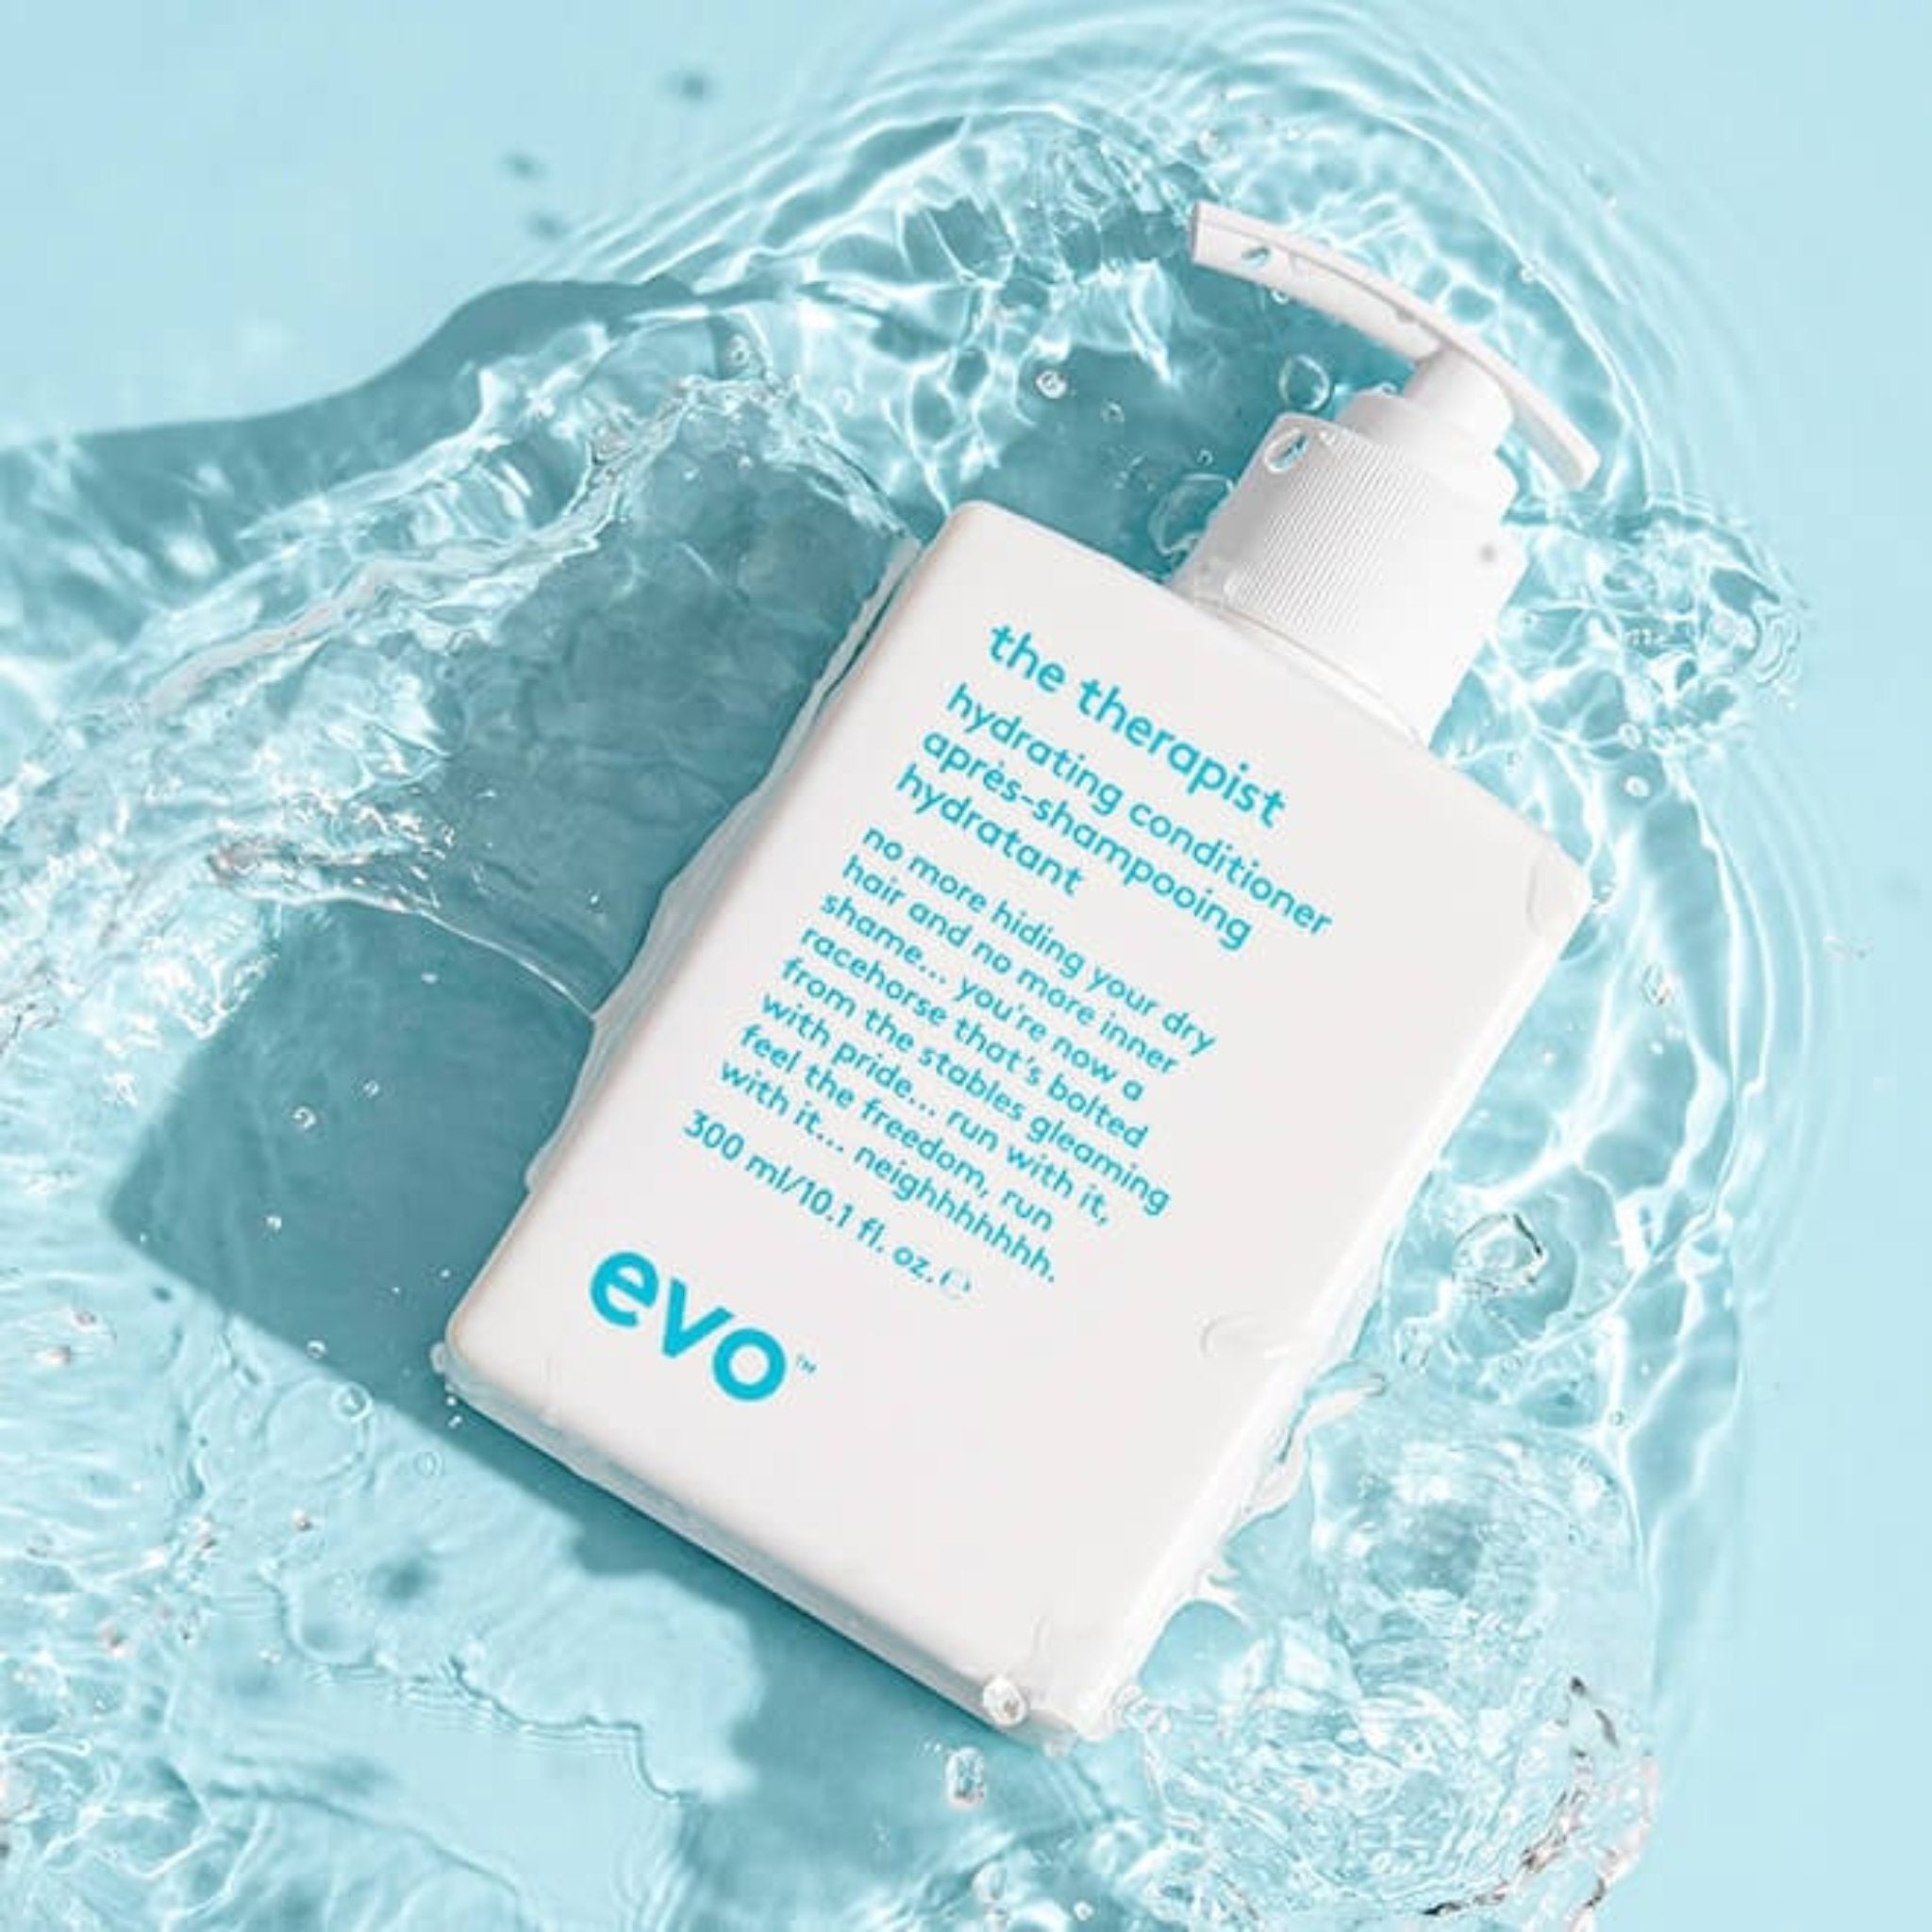 Evo. The Therapist Après-Shampoing Hydratant - 300 ml - Concept C. Shop